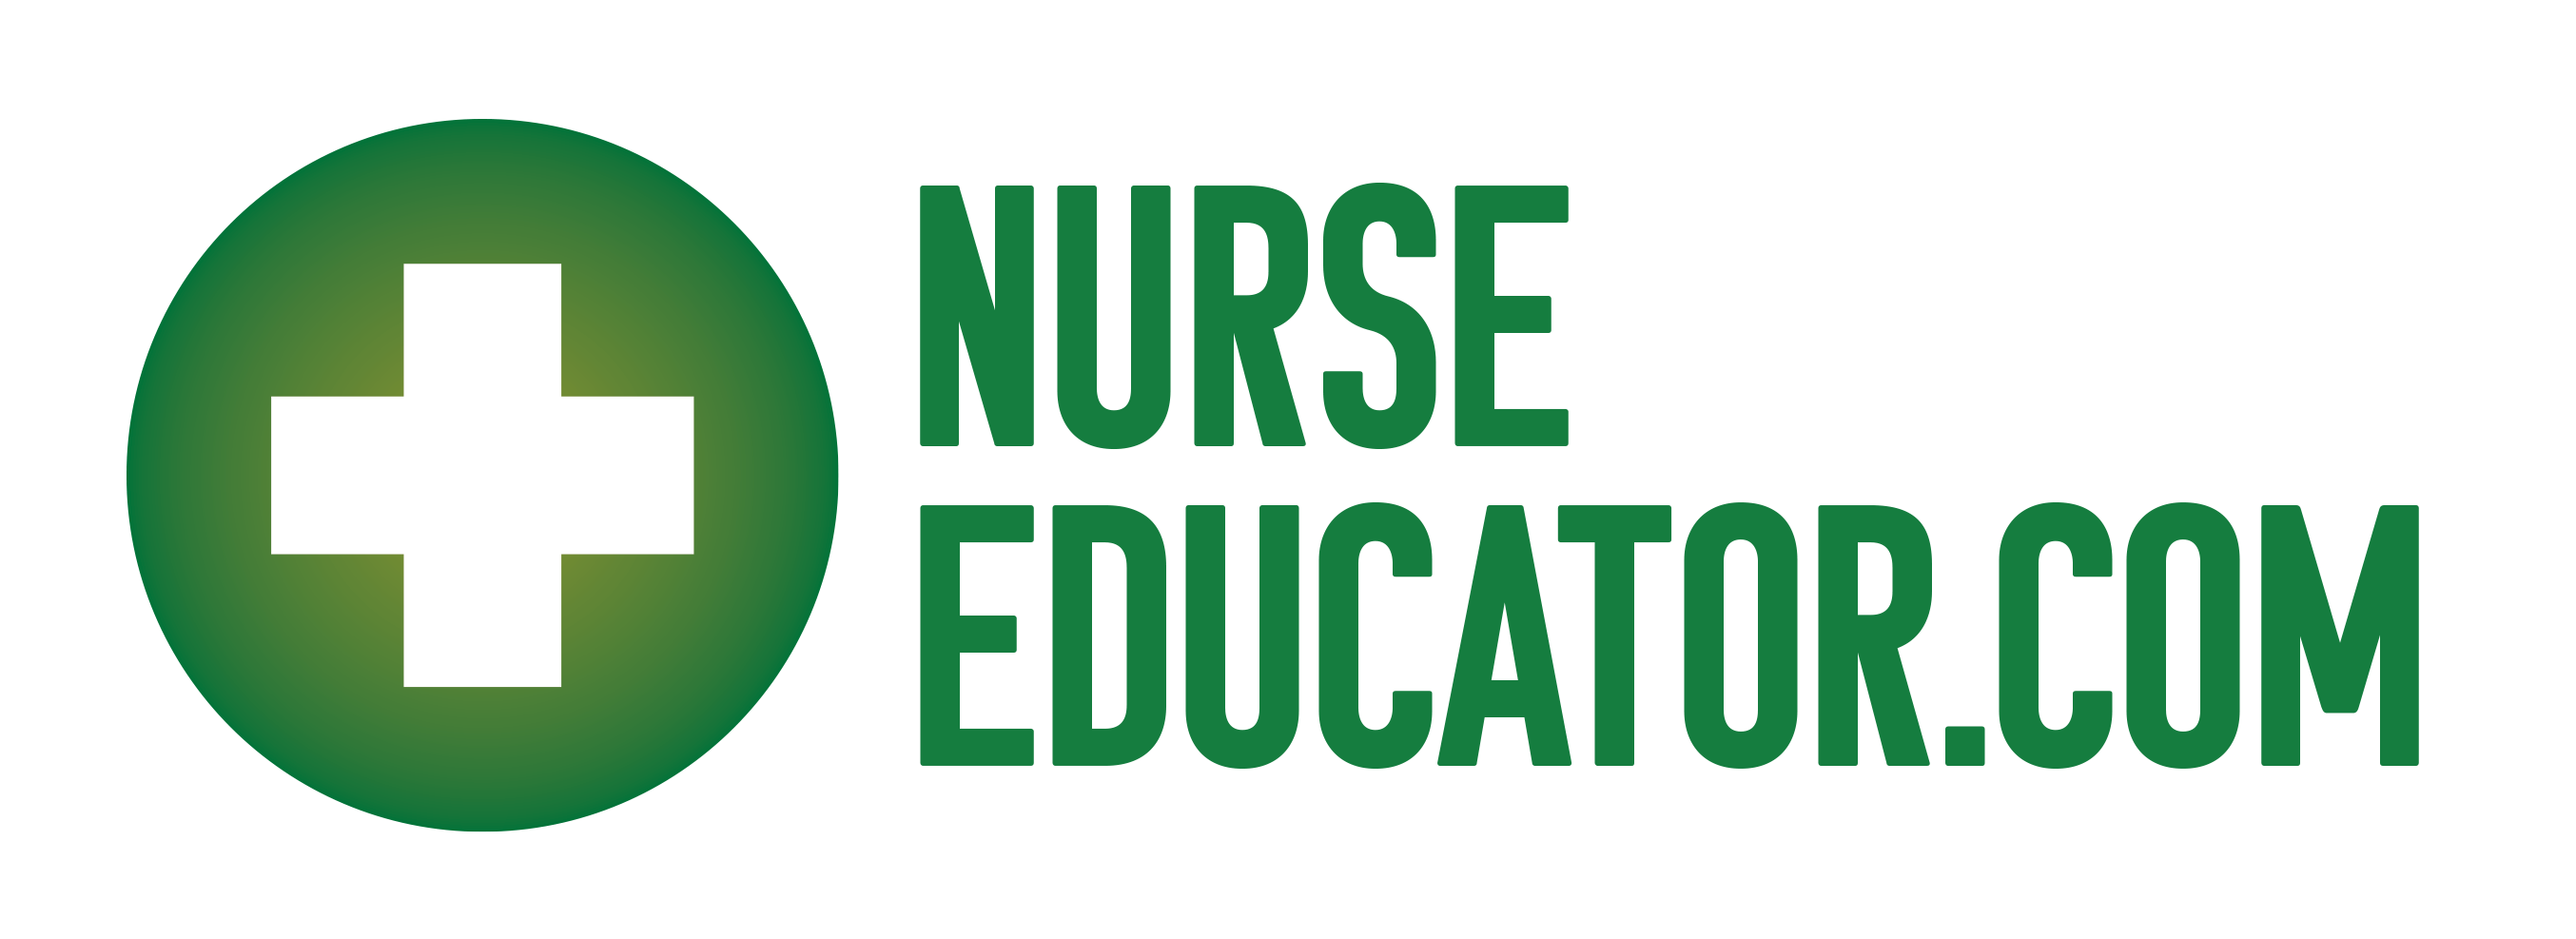 nursing education phd programs